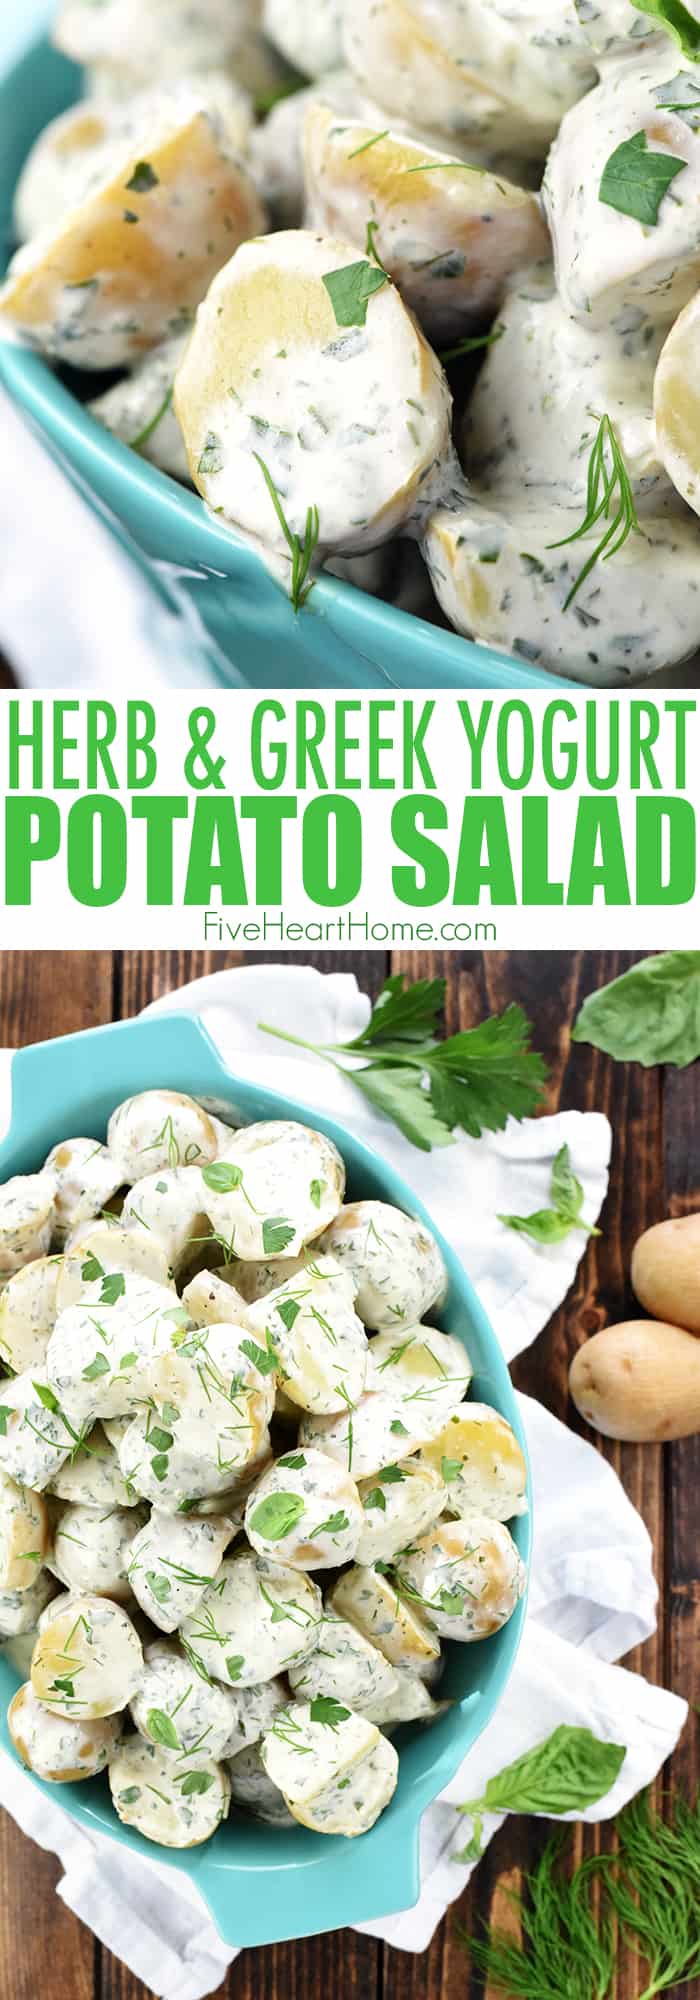 Herb & Greek Yogurt Potato Salad ~ a creamy, lightened-up, versatile side dish recipe with loads of flavor from fresh herbs! | FiveHeartHome.com via @fivehearthome